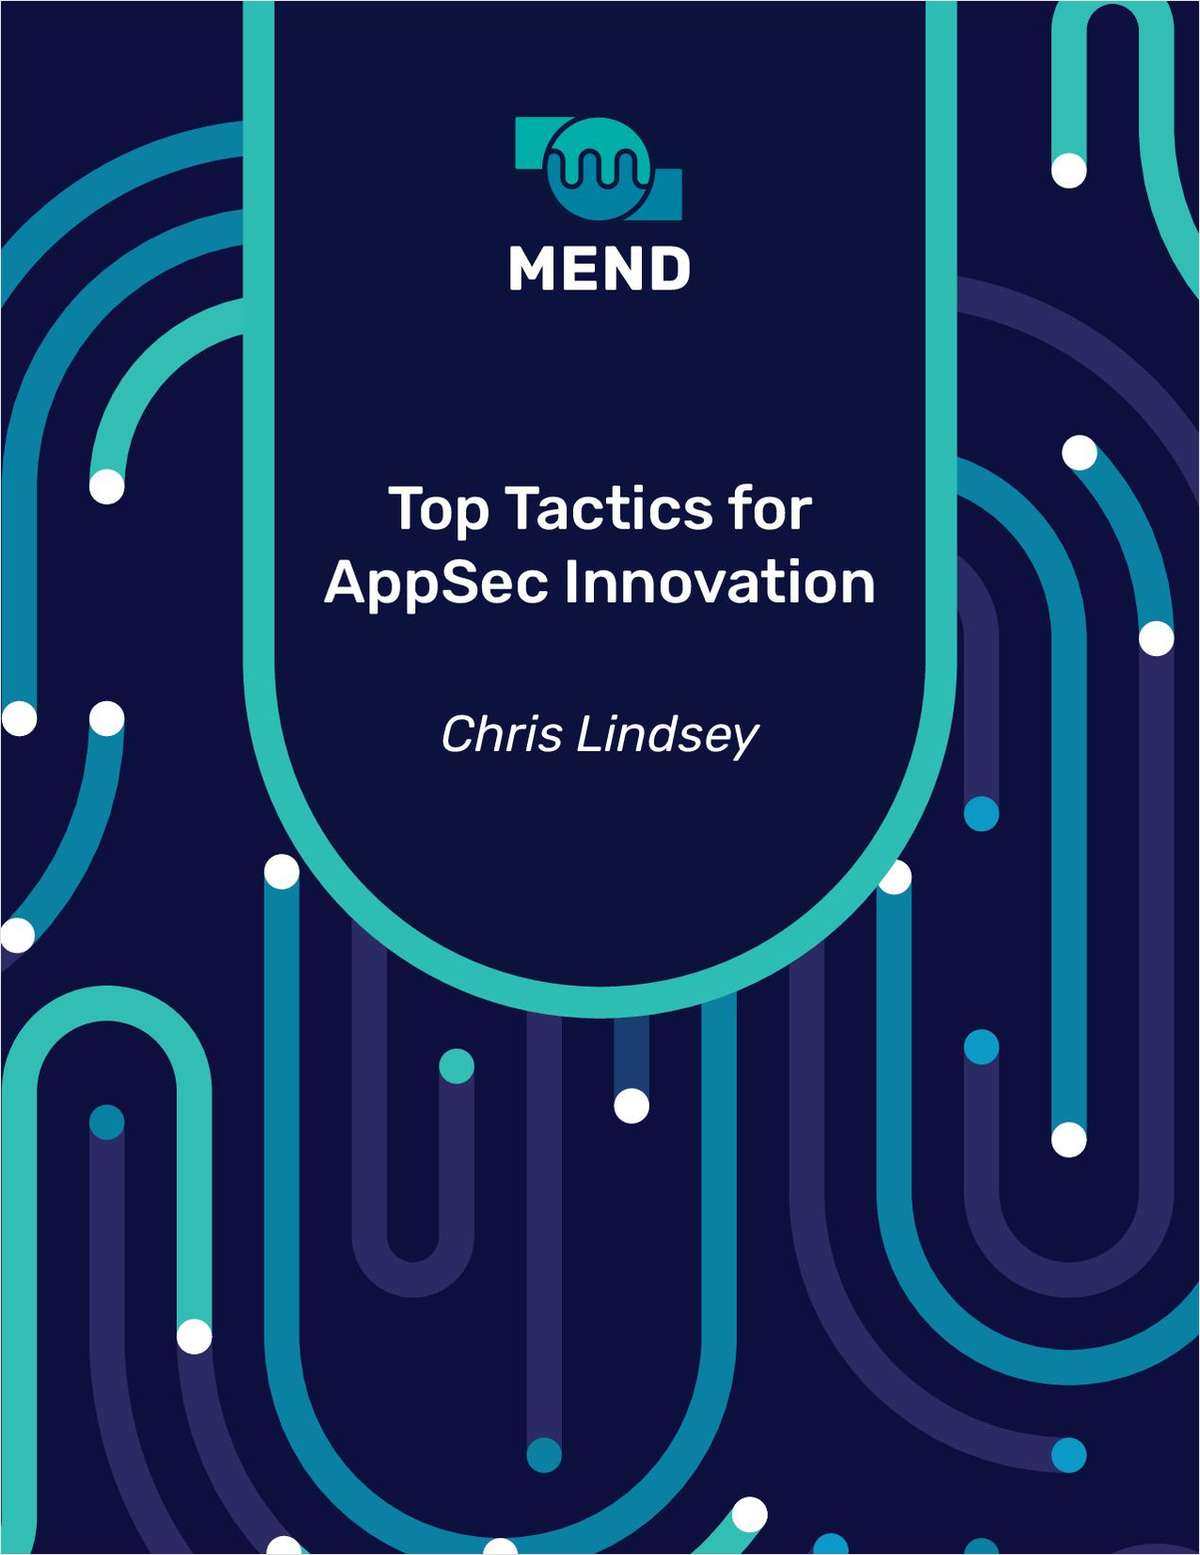 Top Tactics for AppSec Innovation